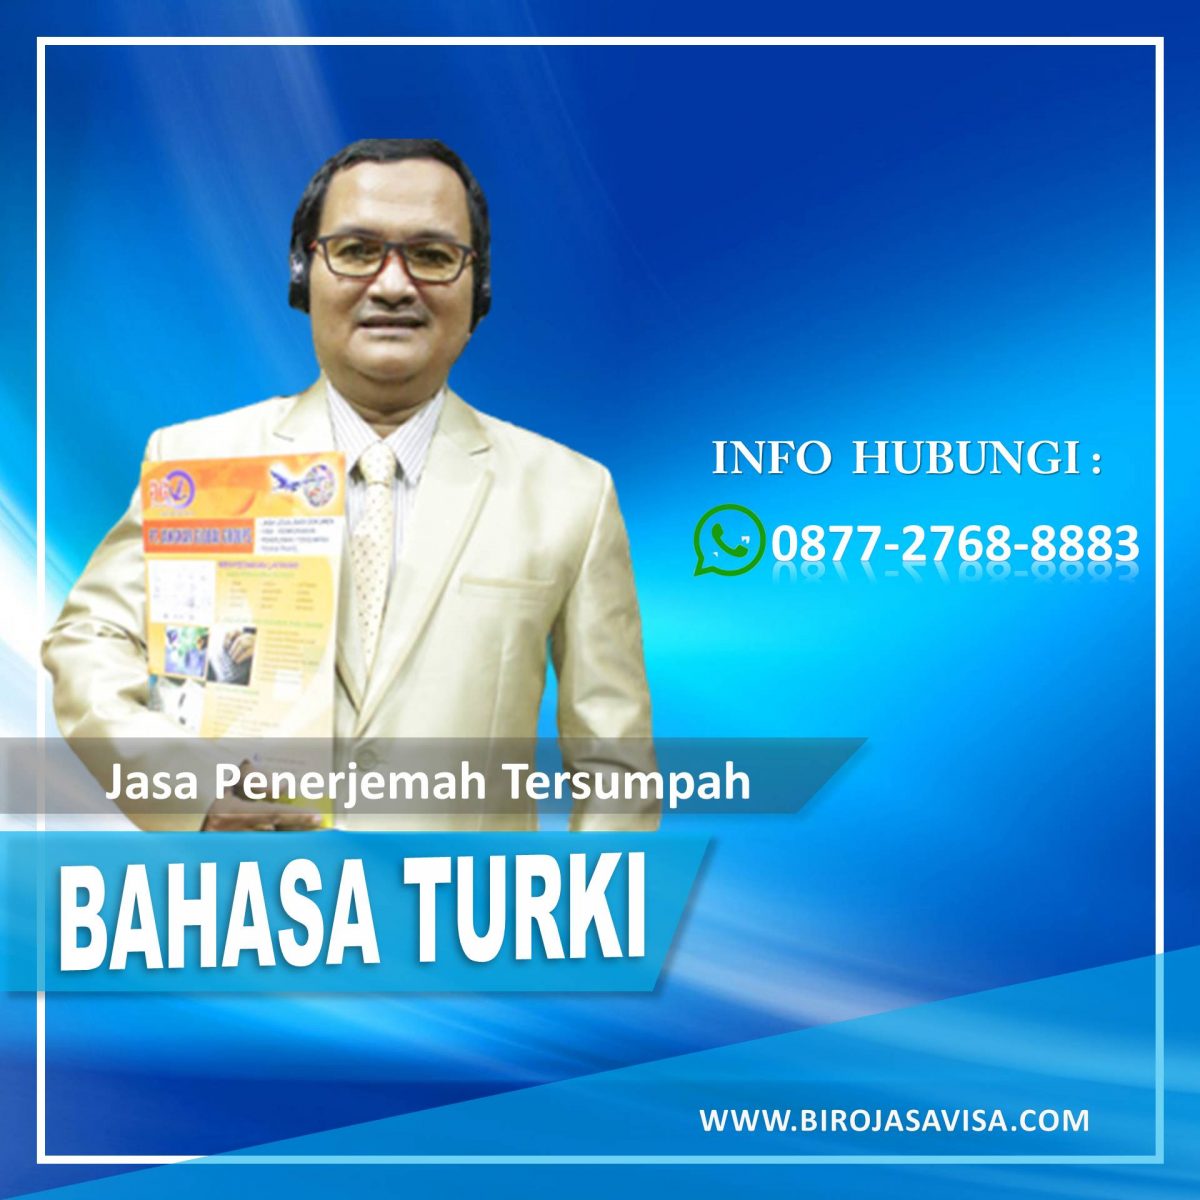 Info Jasa Penerjemah Tersumpah Bahasa Turki Resmi dan Berpengalaman di Pasirsari Bekasi, Hubungi 0877 2768 8883